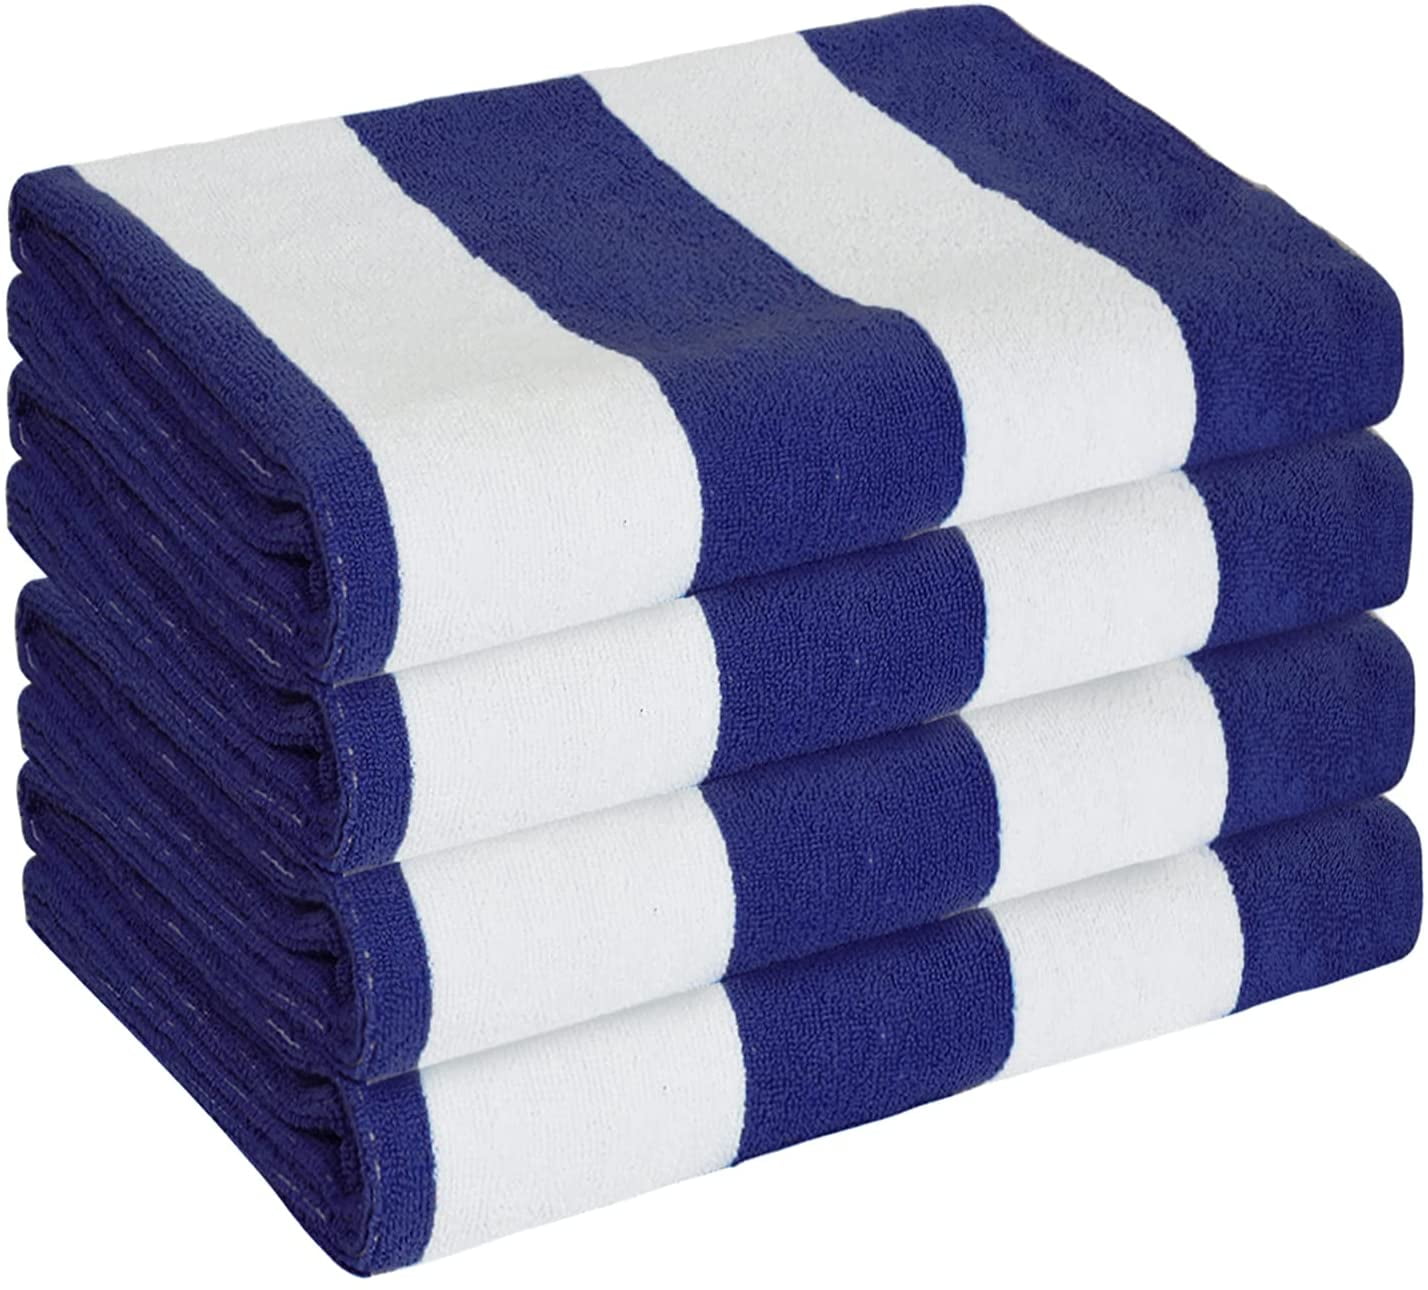 Blue-Yellow, 35x65 Inch Premium Quality 100% Cotton Turkish Cabana Thick Stripe Pool Beach Towels 2-Pack